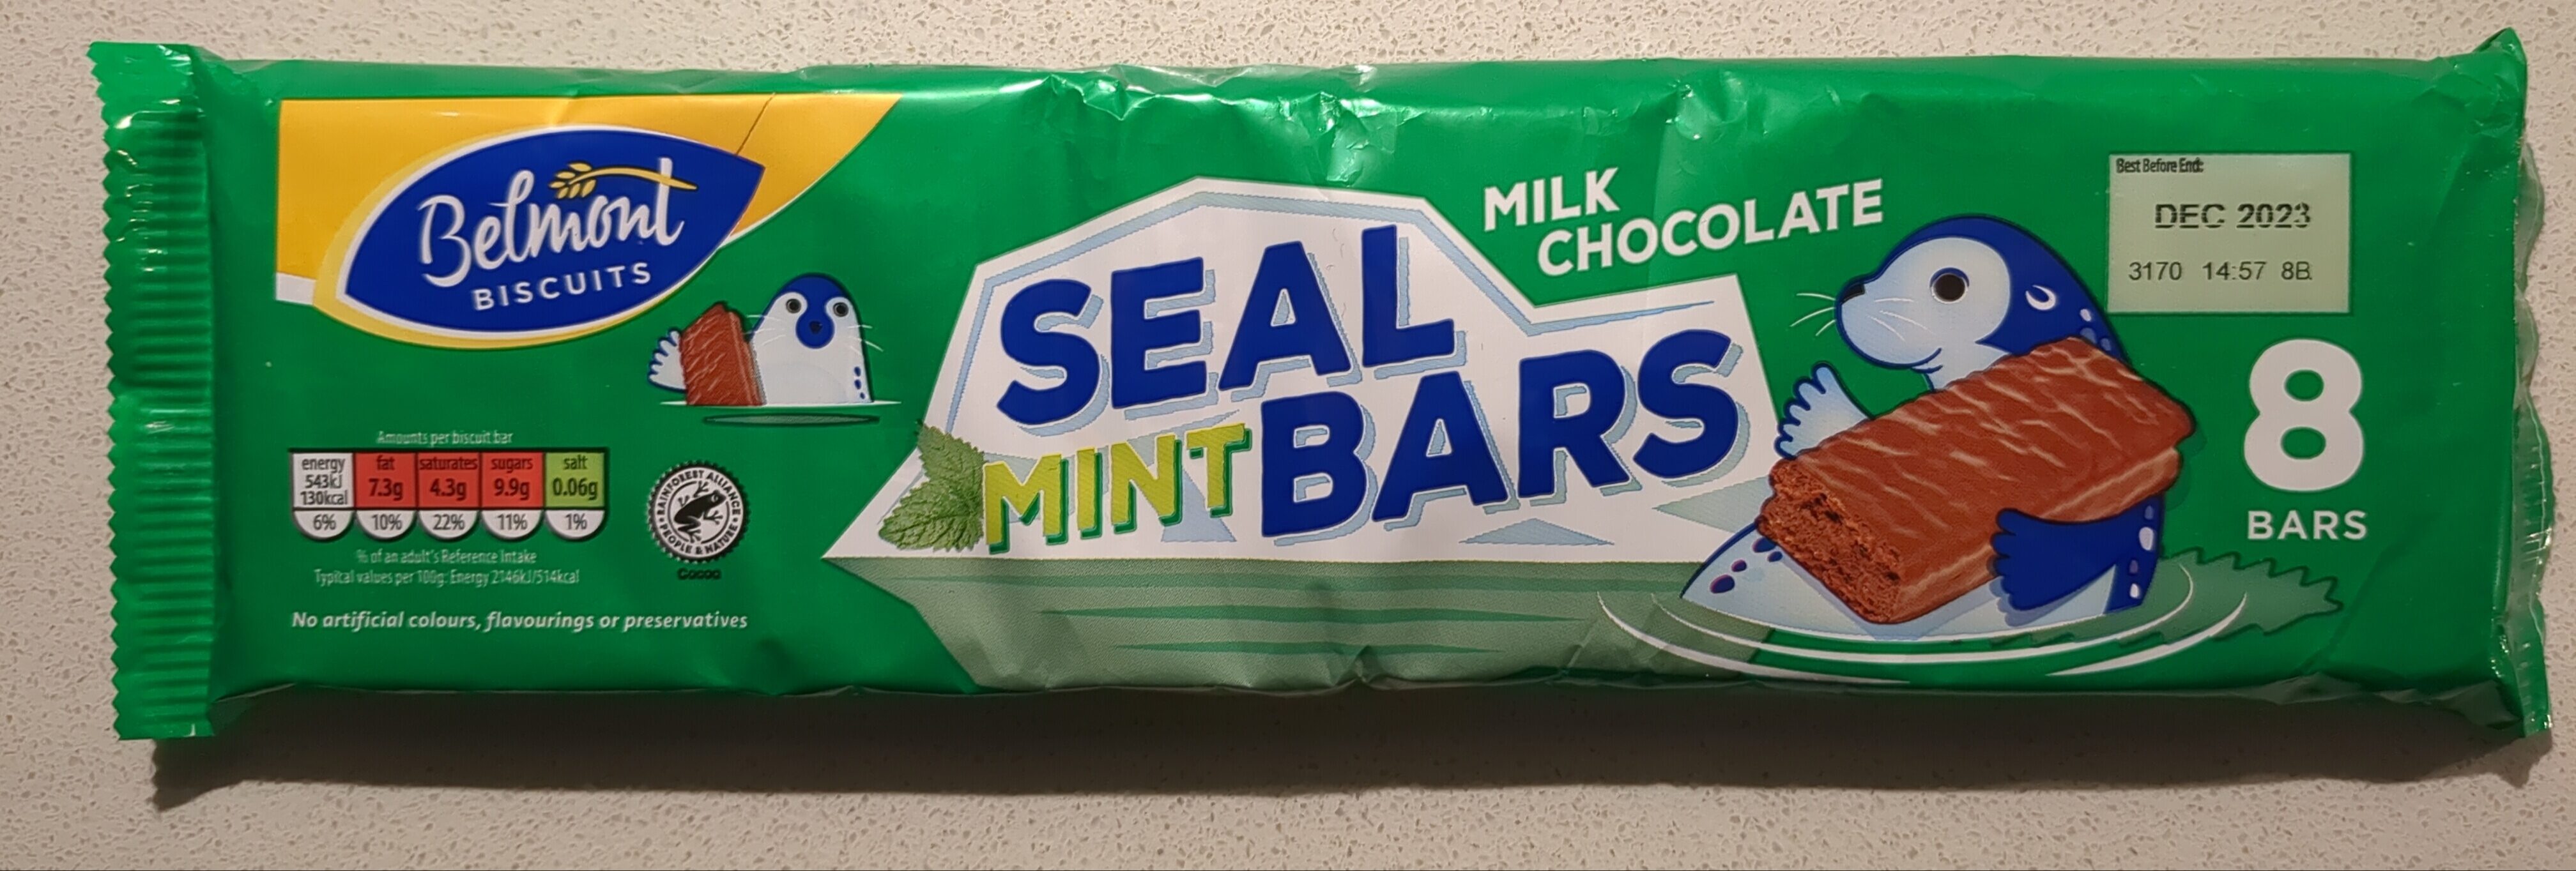 Seal bars: Mint - Produkt - en